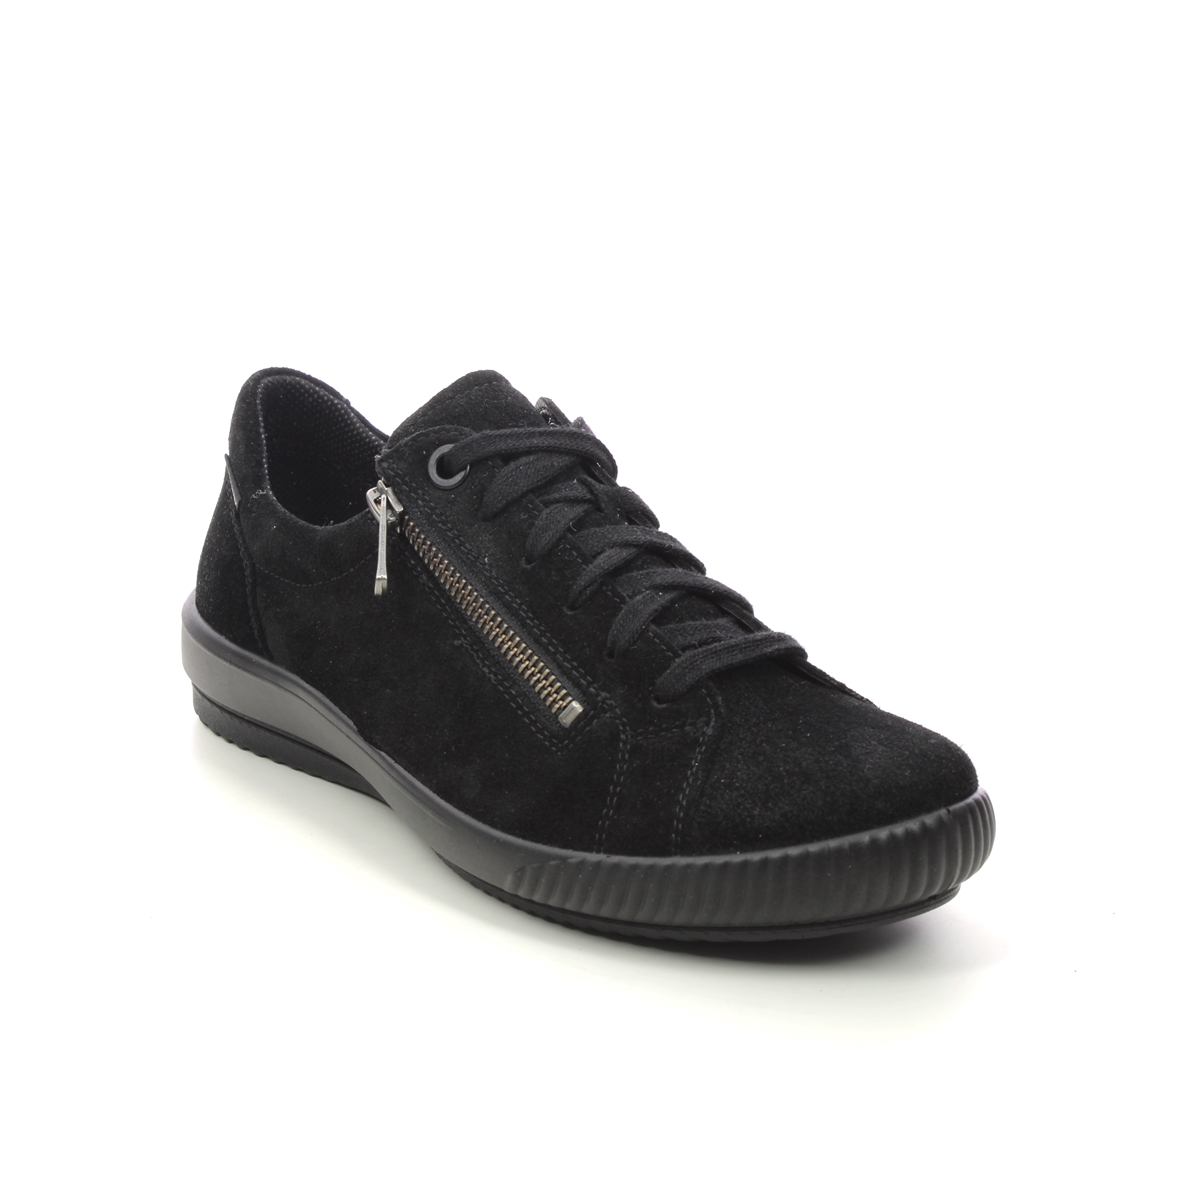 Legero Tanaro Gtx Zip Black Suede Womens Lacing Shoes 2000219-0000 In Size 6 In Plain Black Suede